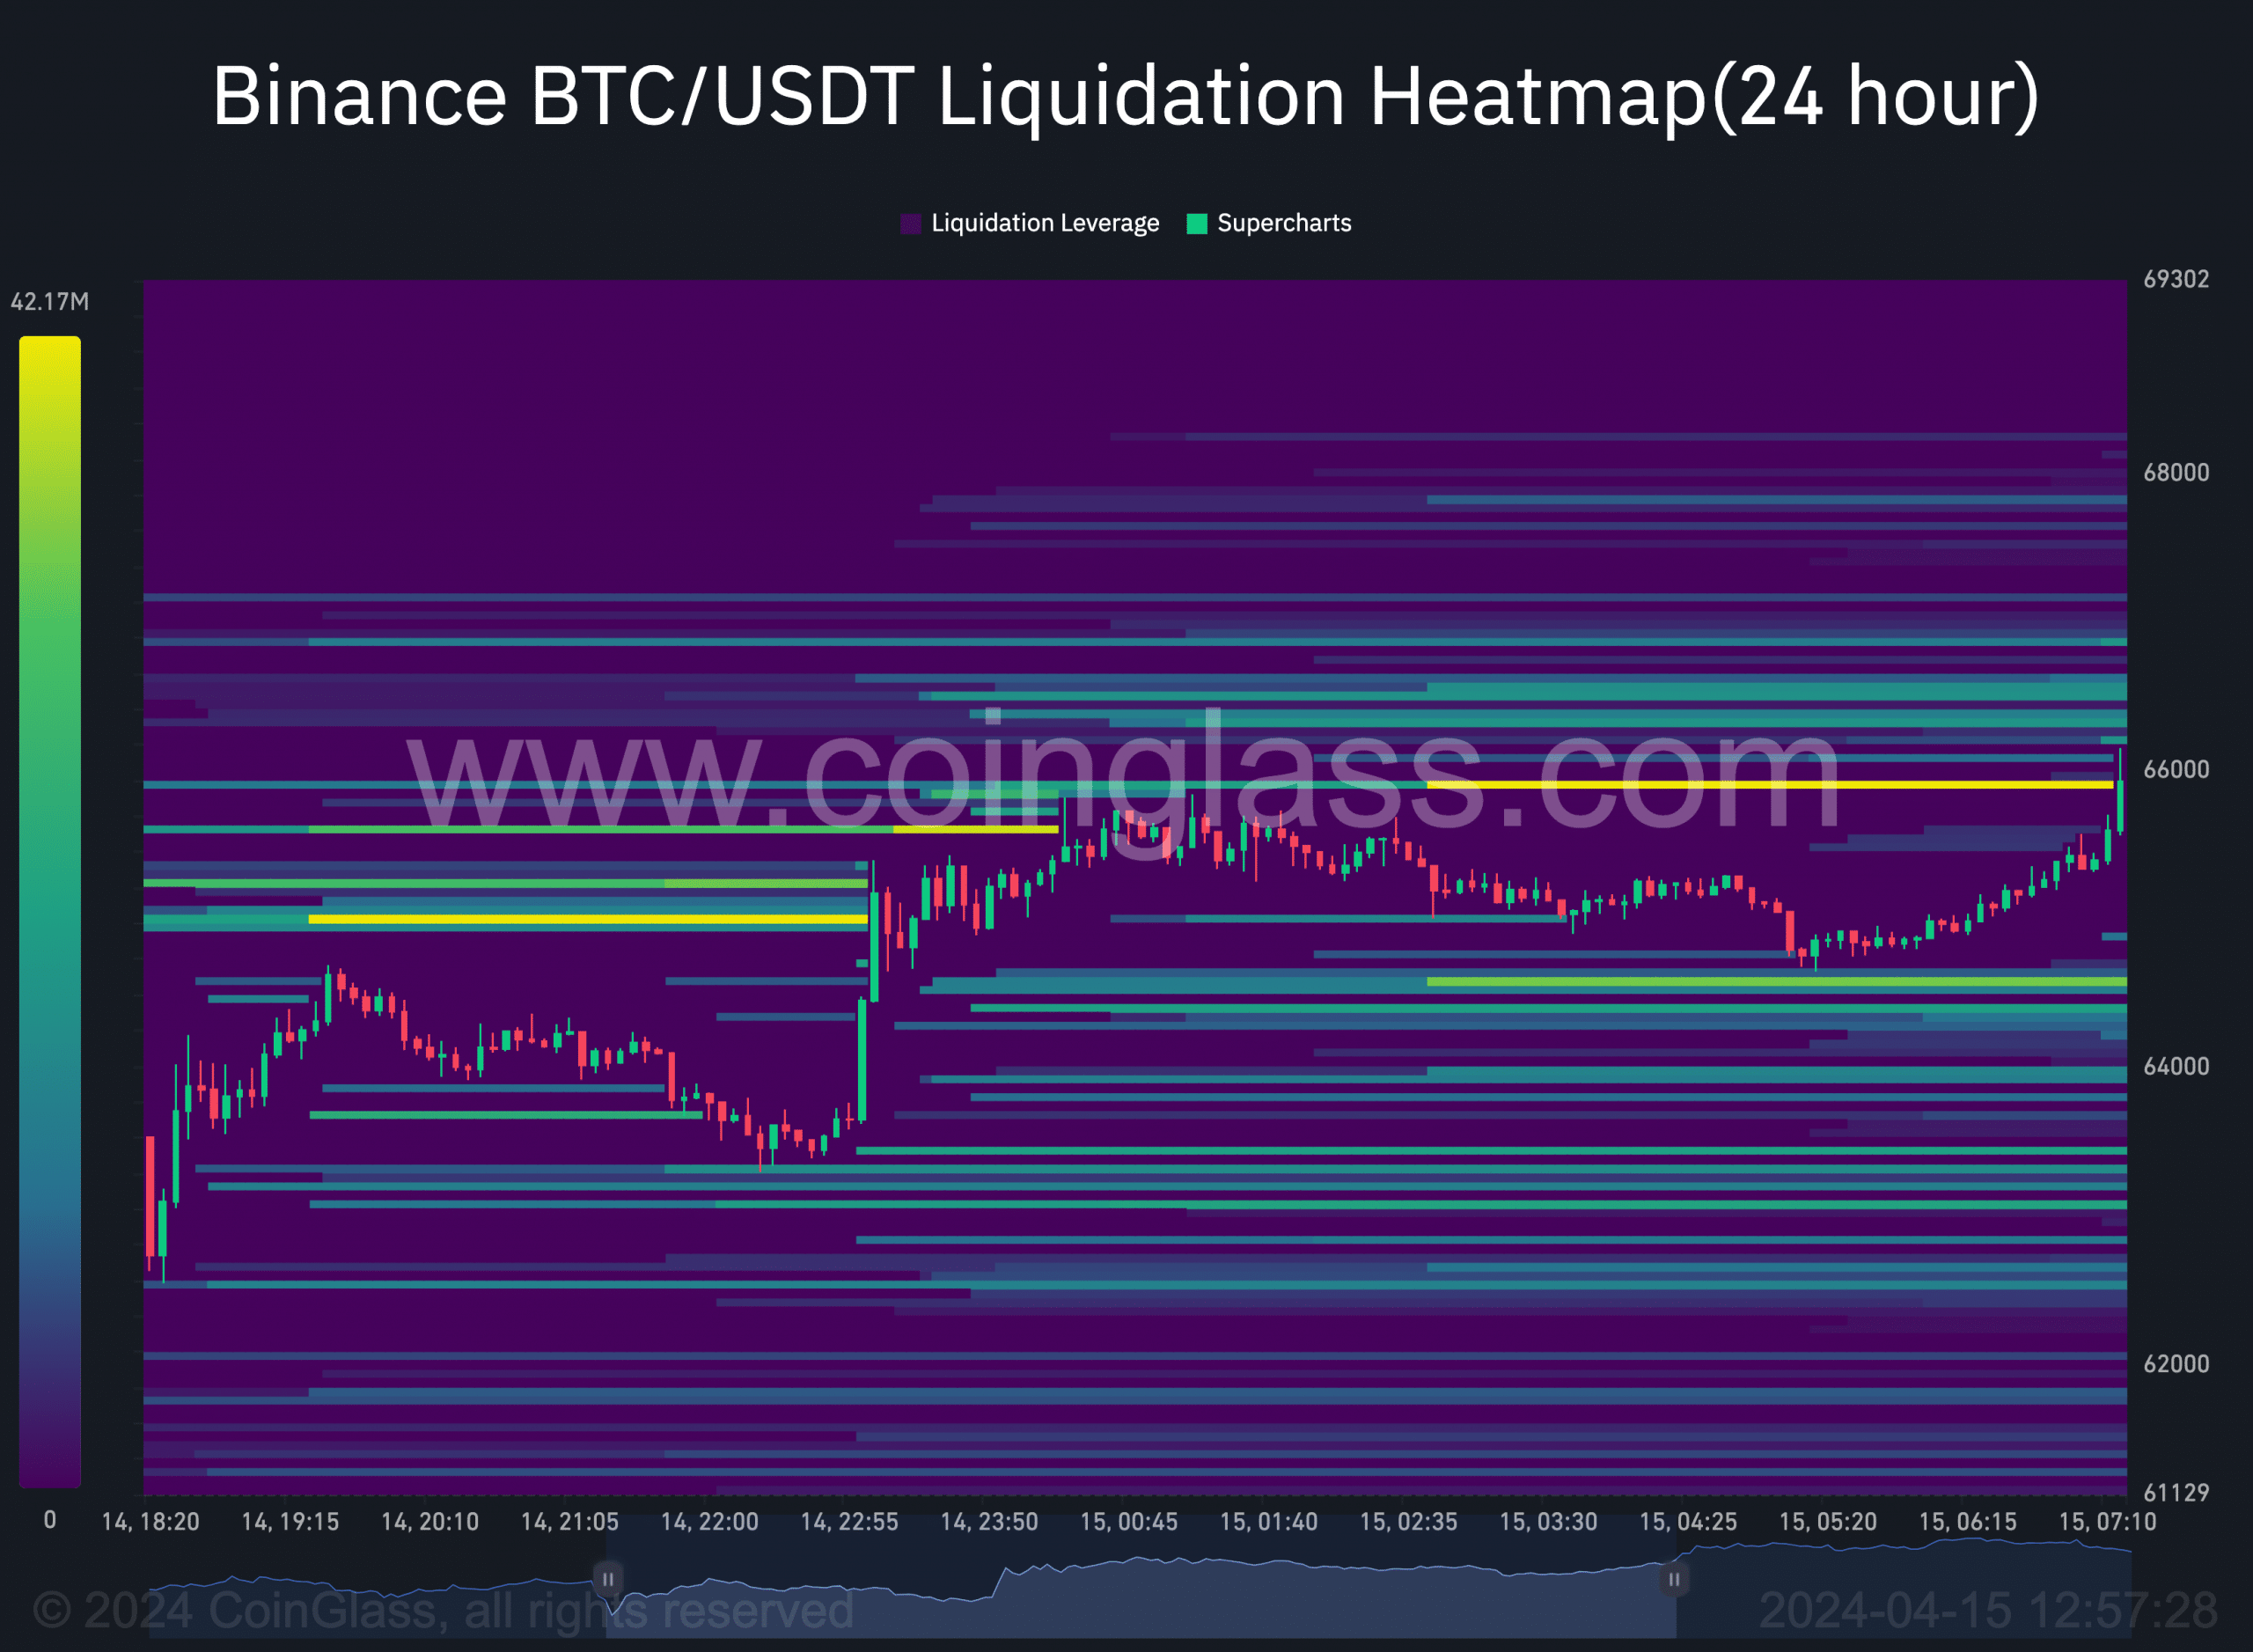 Bitcoin liquidation heatmap showing different levels of liquidation